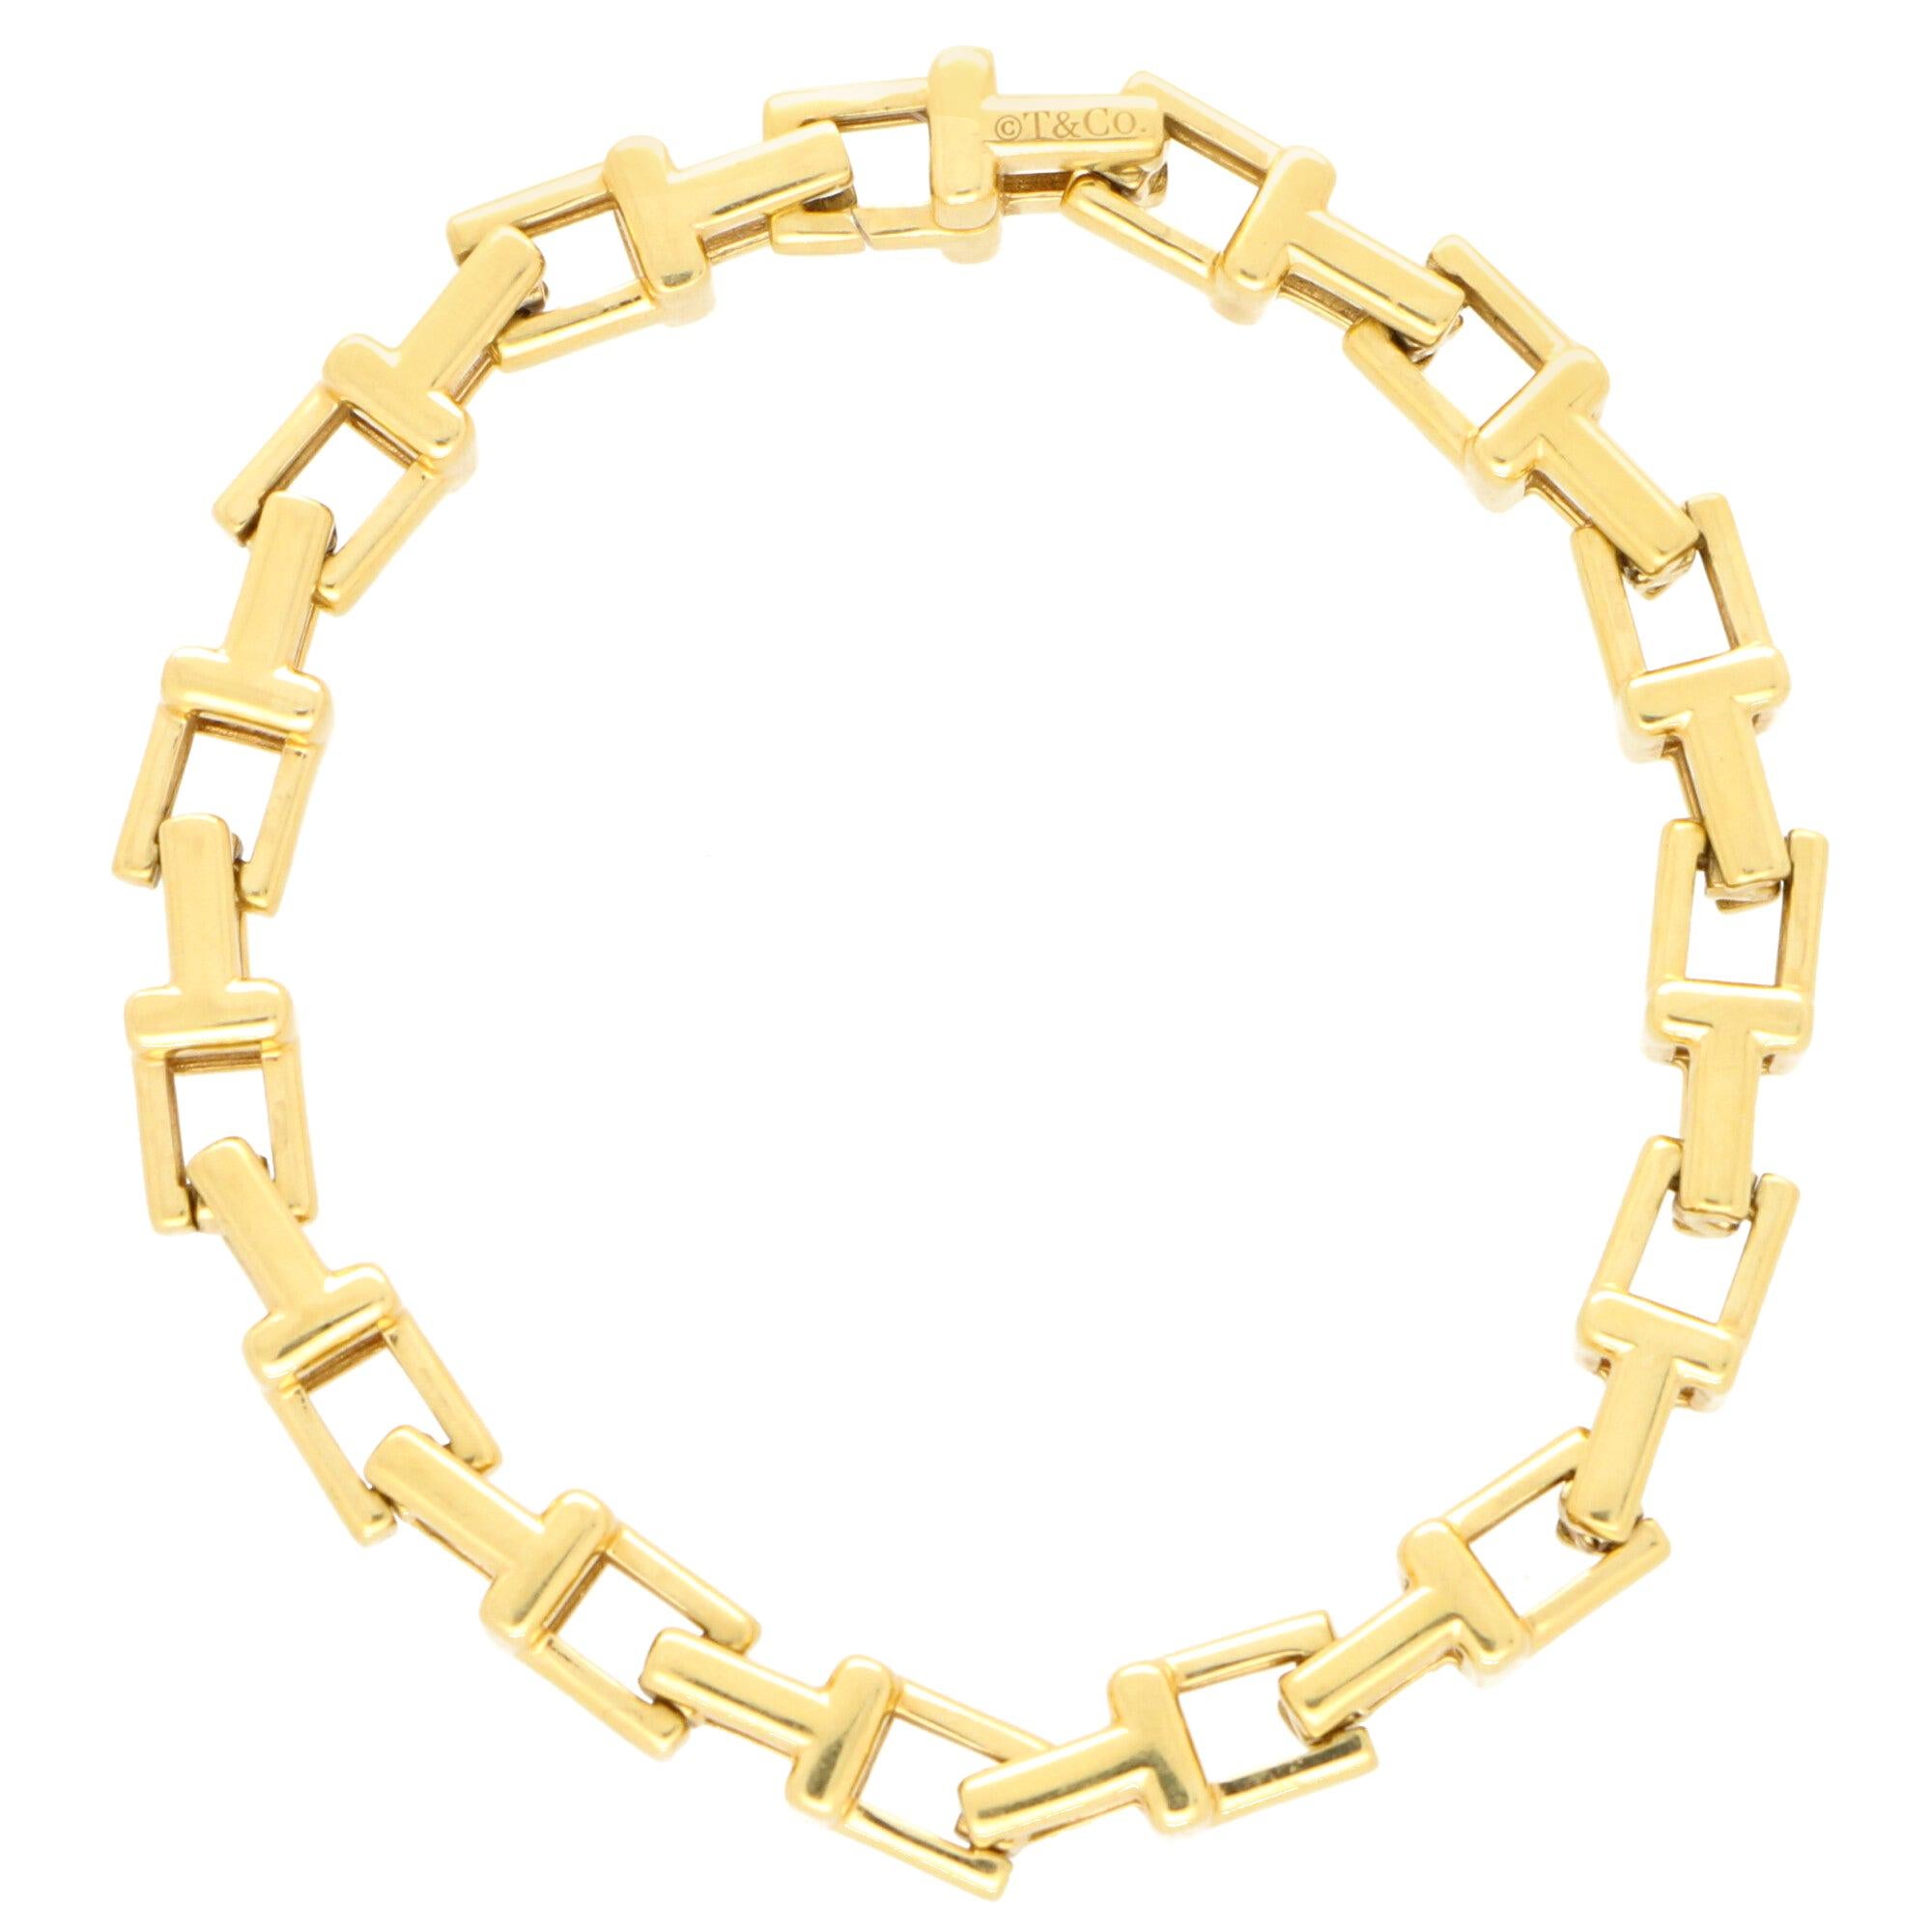 Vintage Tiffany & Co. 'Tiffany T' Chain Link Bracelet Set in 18k Yellow Gold